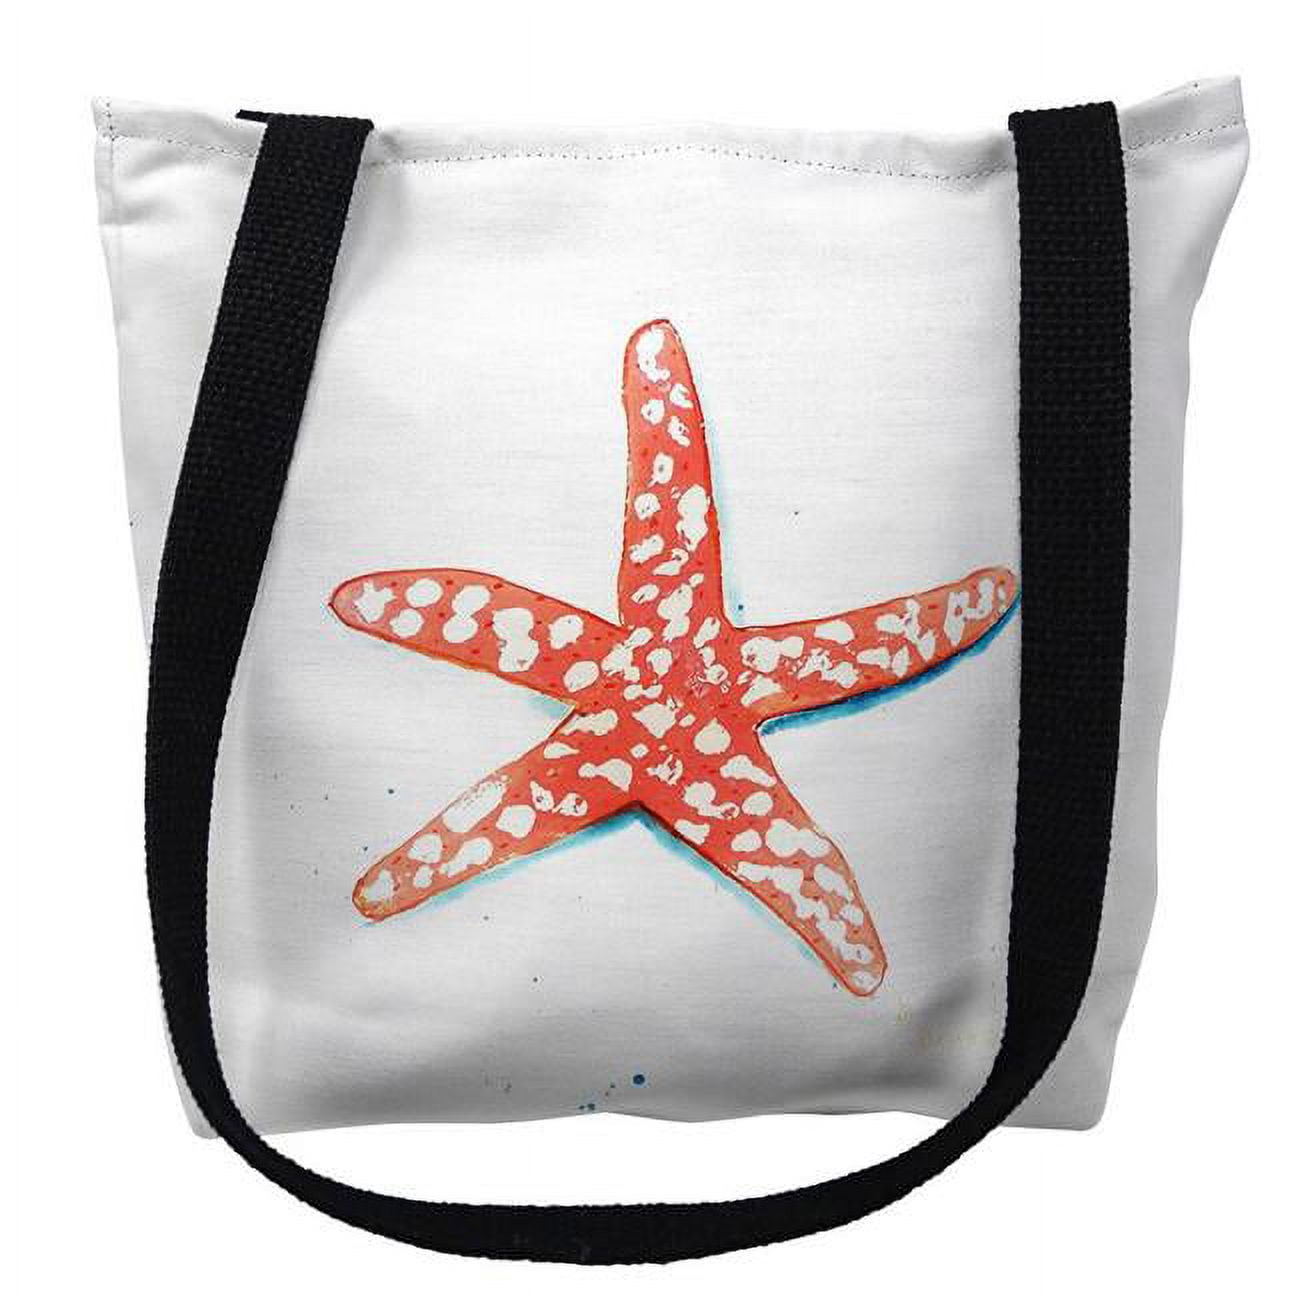 Ty091m 16 X 16 In. Coral Starfish Tote Bag - Medium